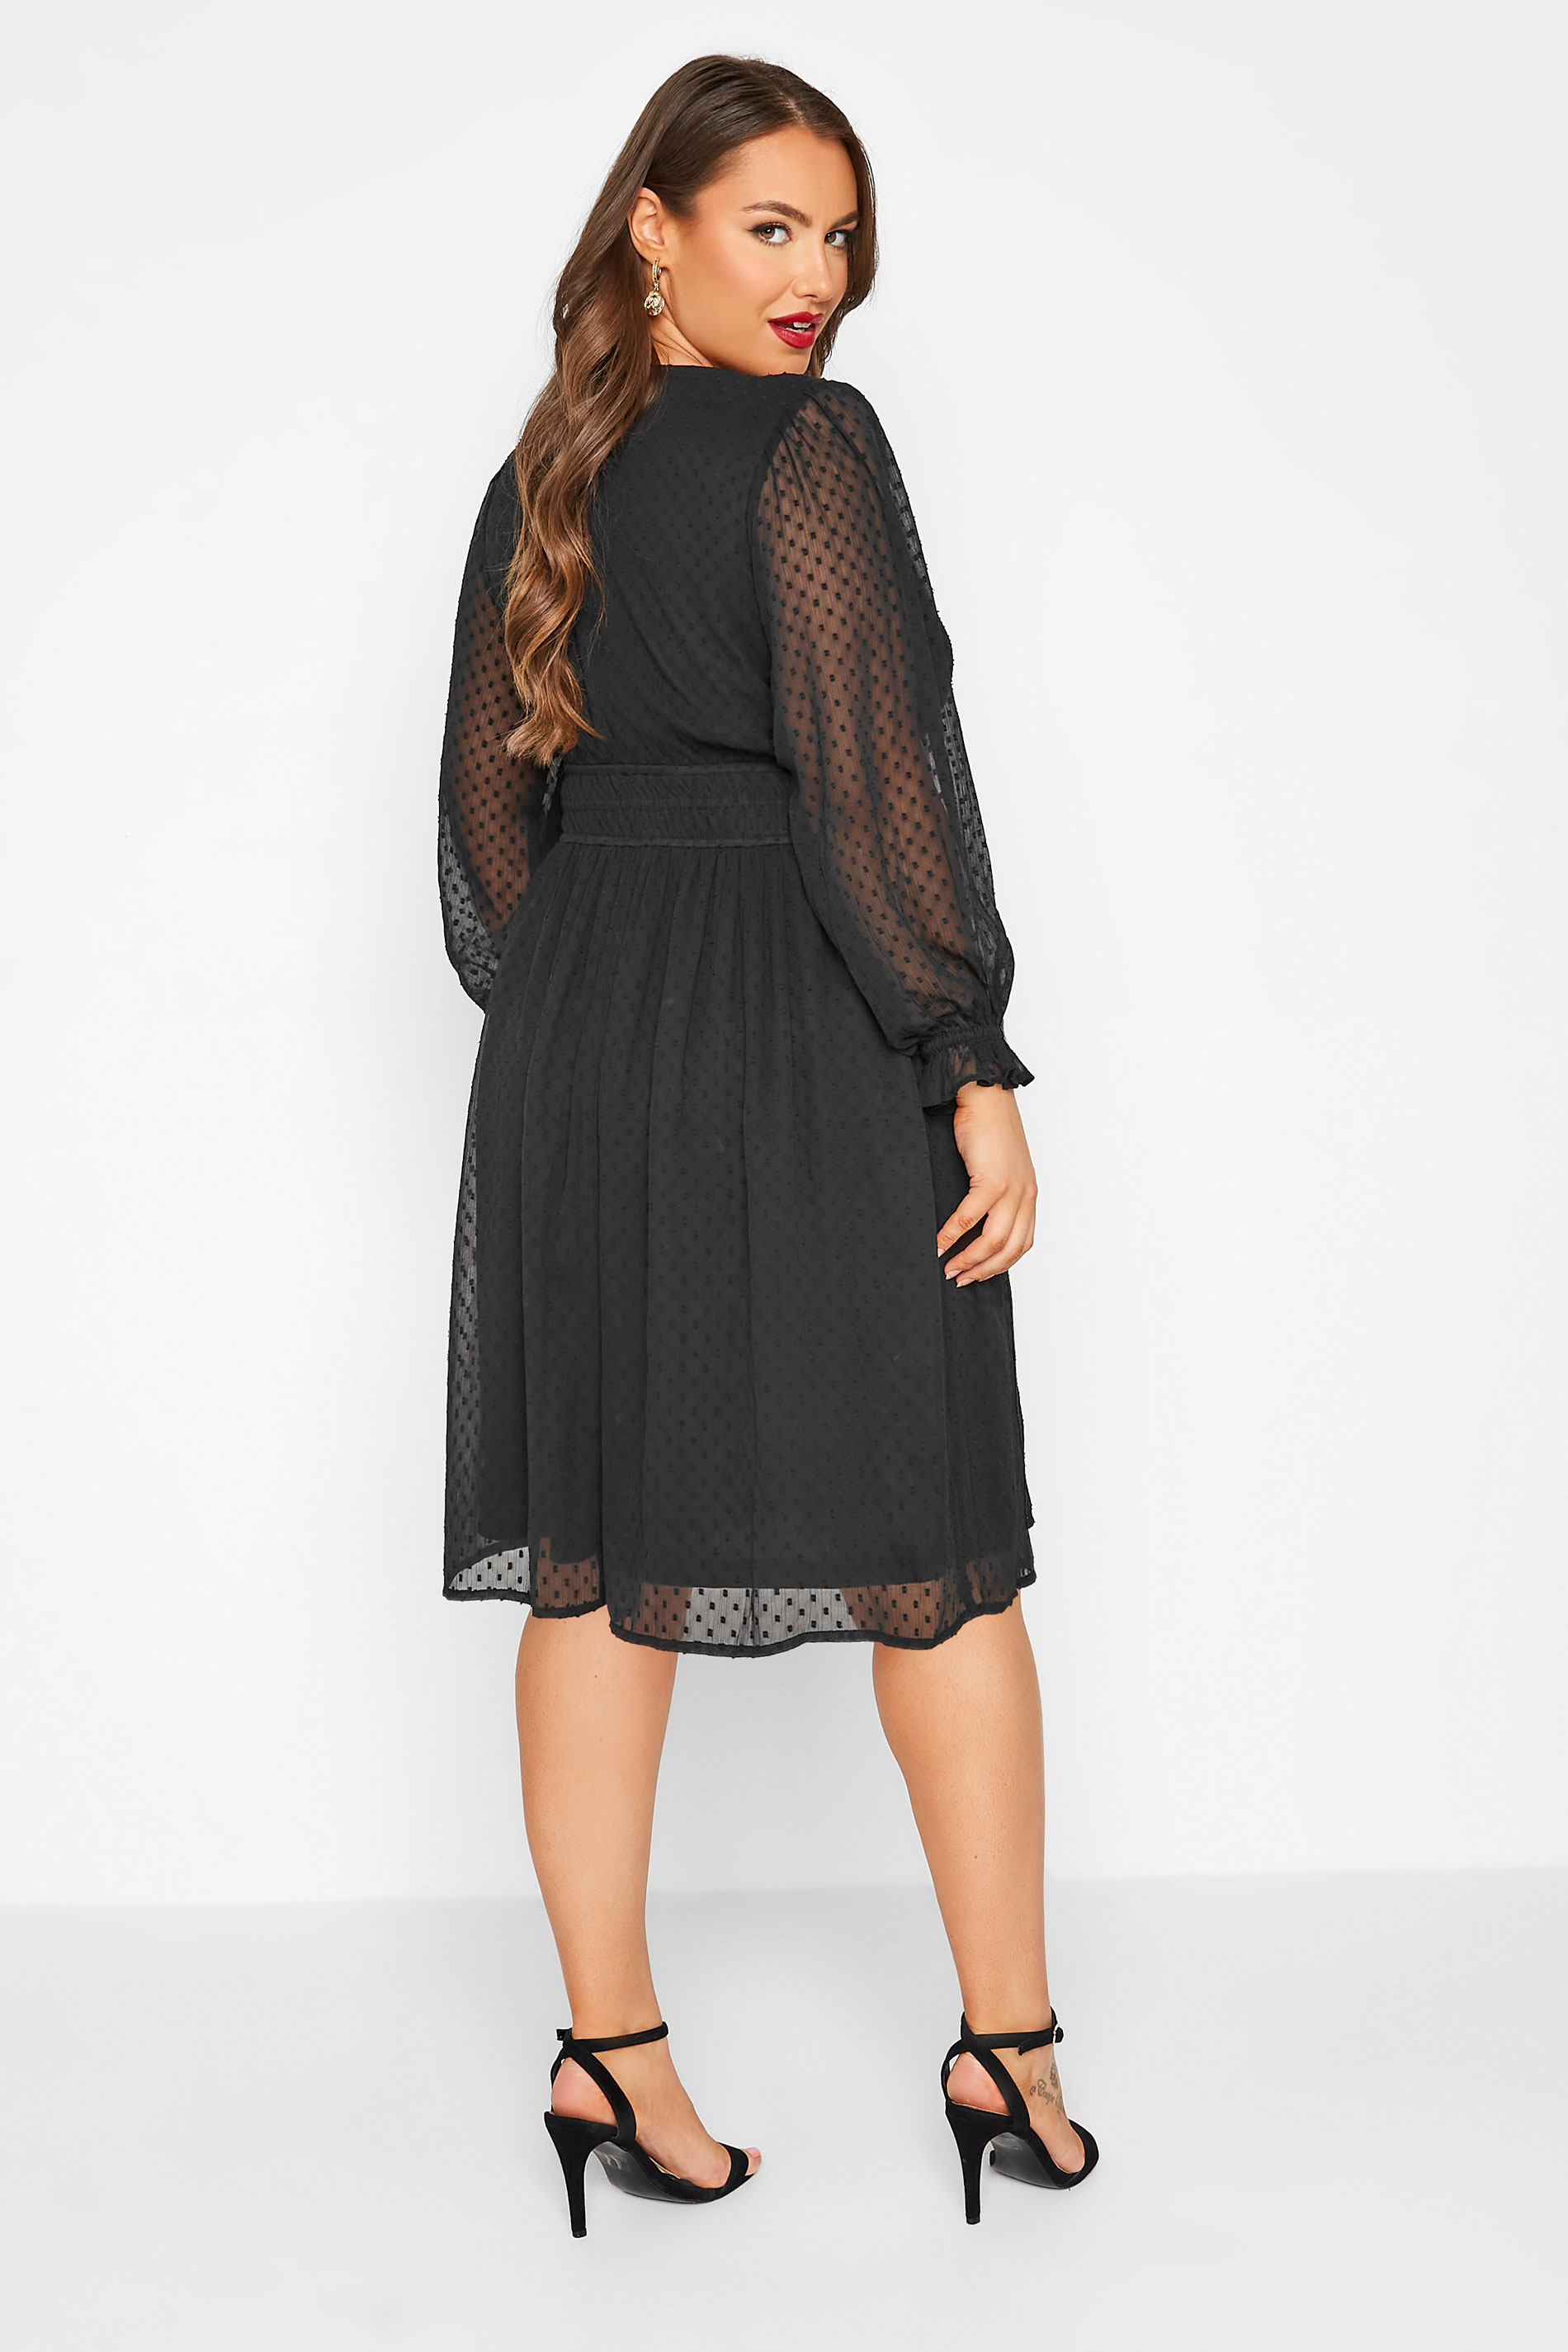 YOURS LONDON Plus Size Black Dobby Ruffle Shoulder Dress | Yours Clothing 3